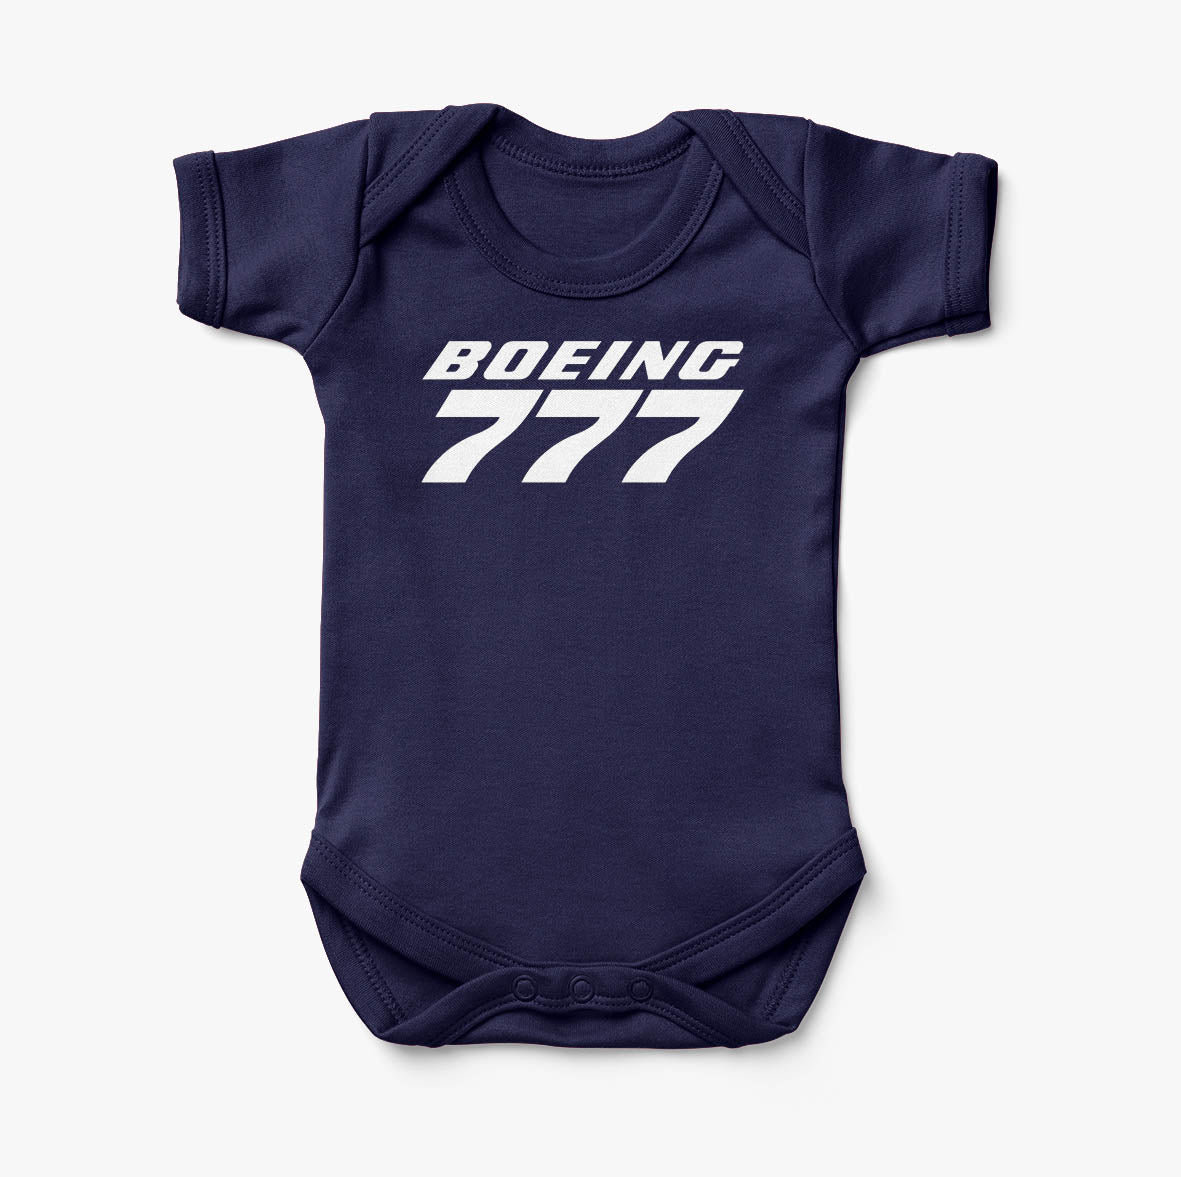 Boeing 777 & Text Designed Baby Bodysuits